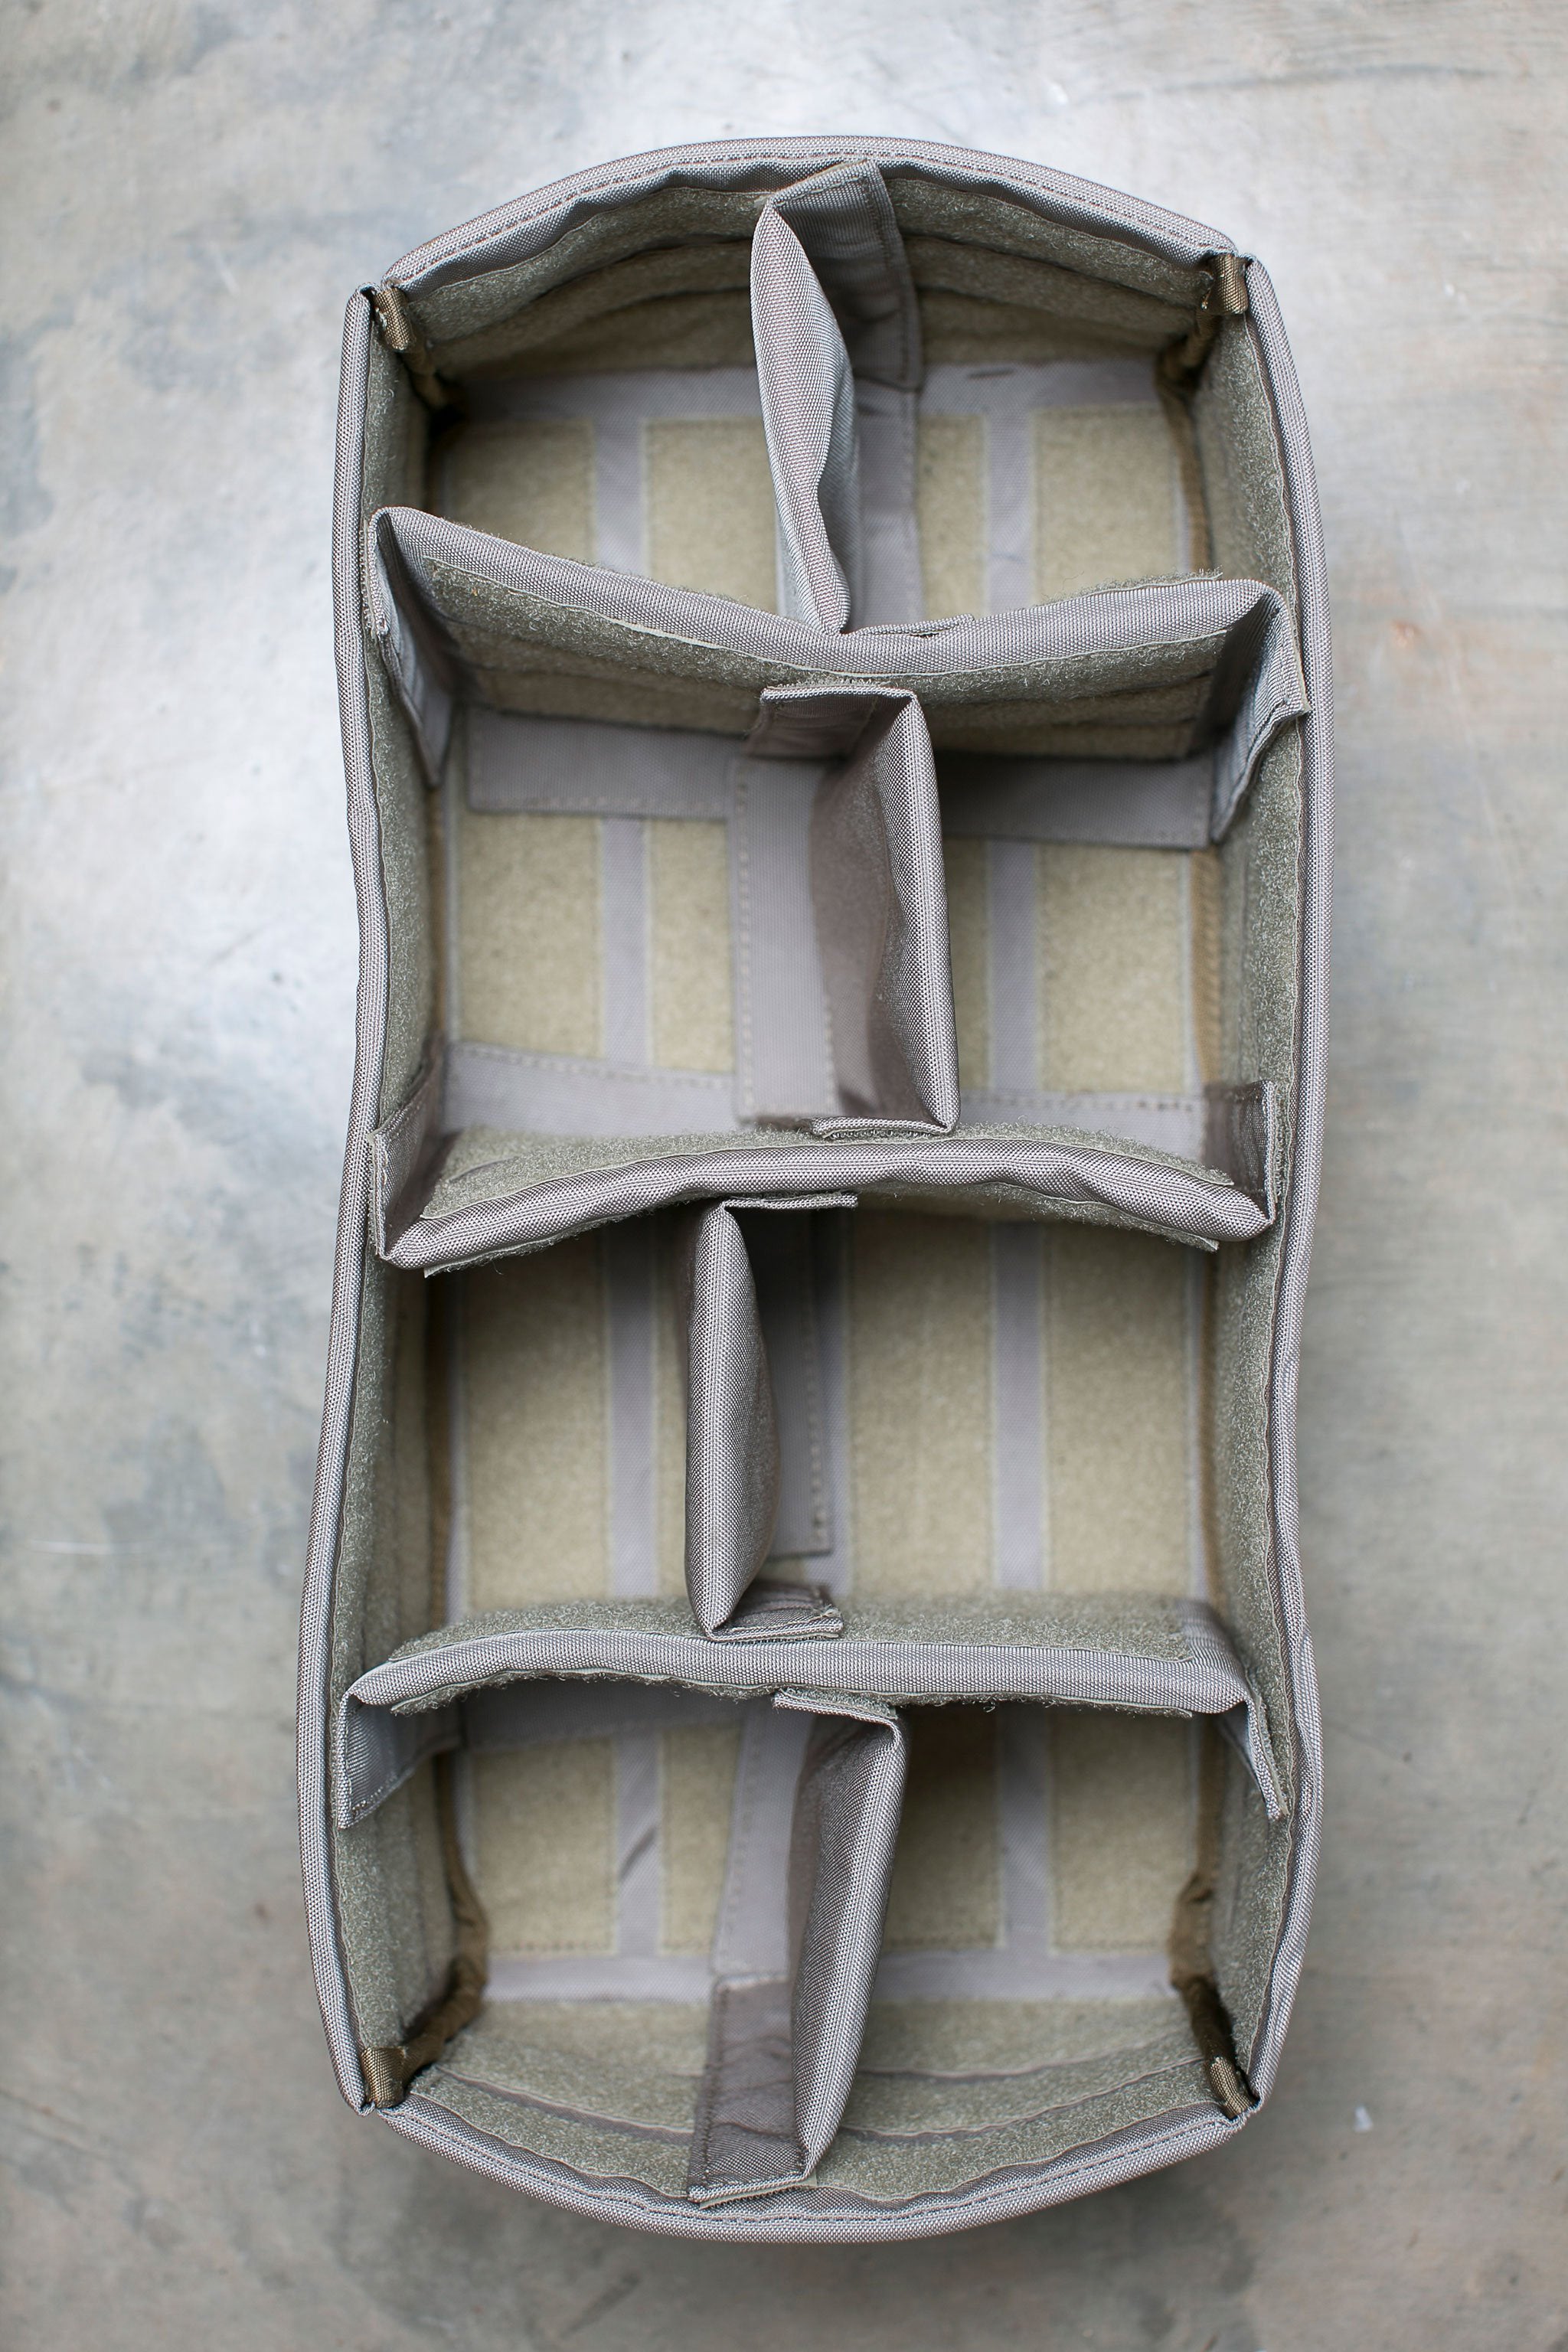 Kelly Moore Jude Canvas/Full Grain Leather Duffel 2.0 Camera Bag